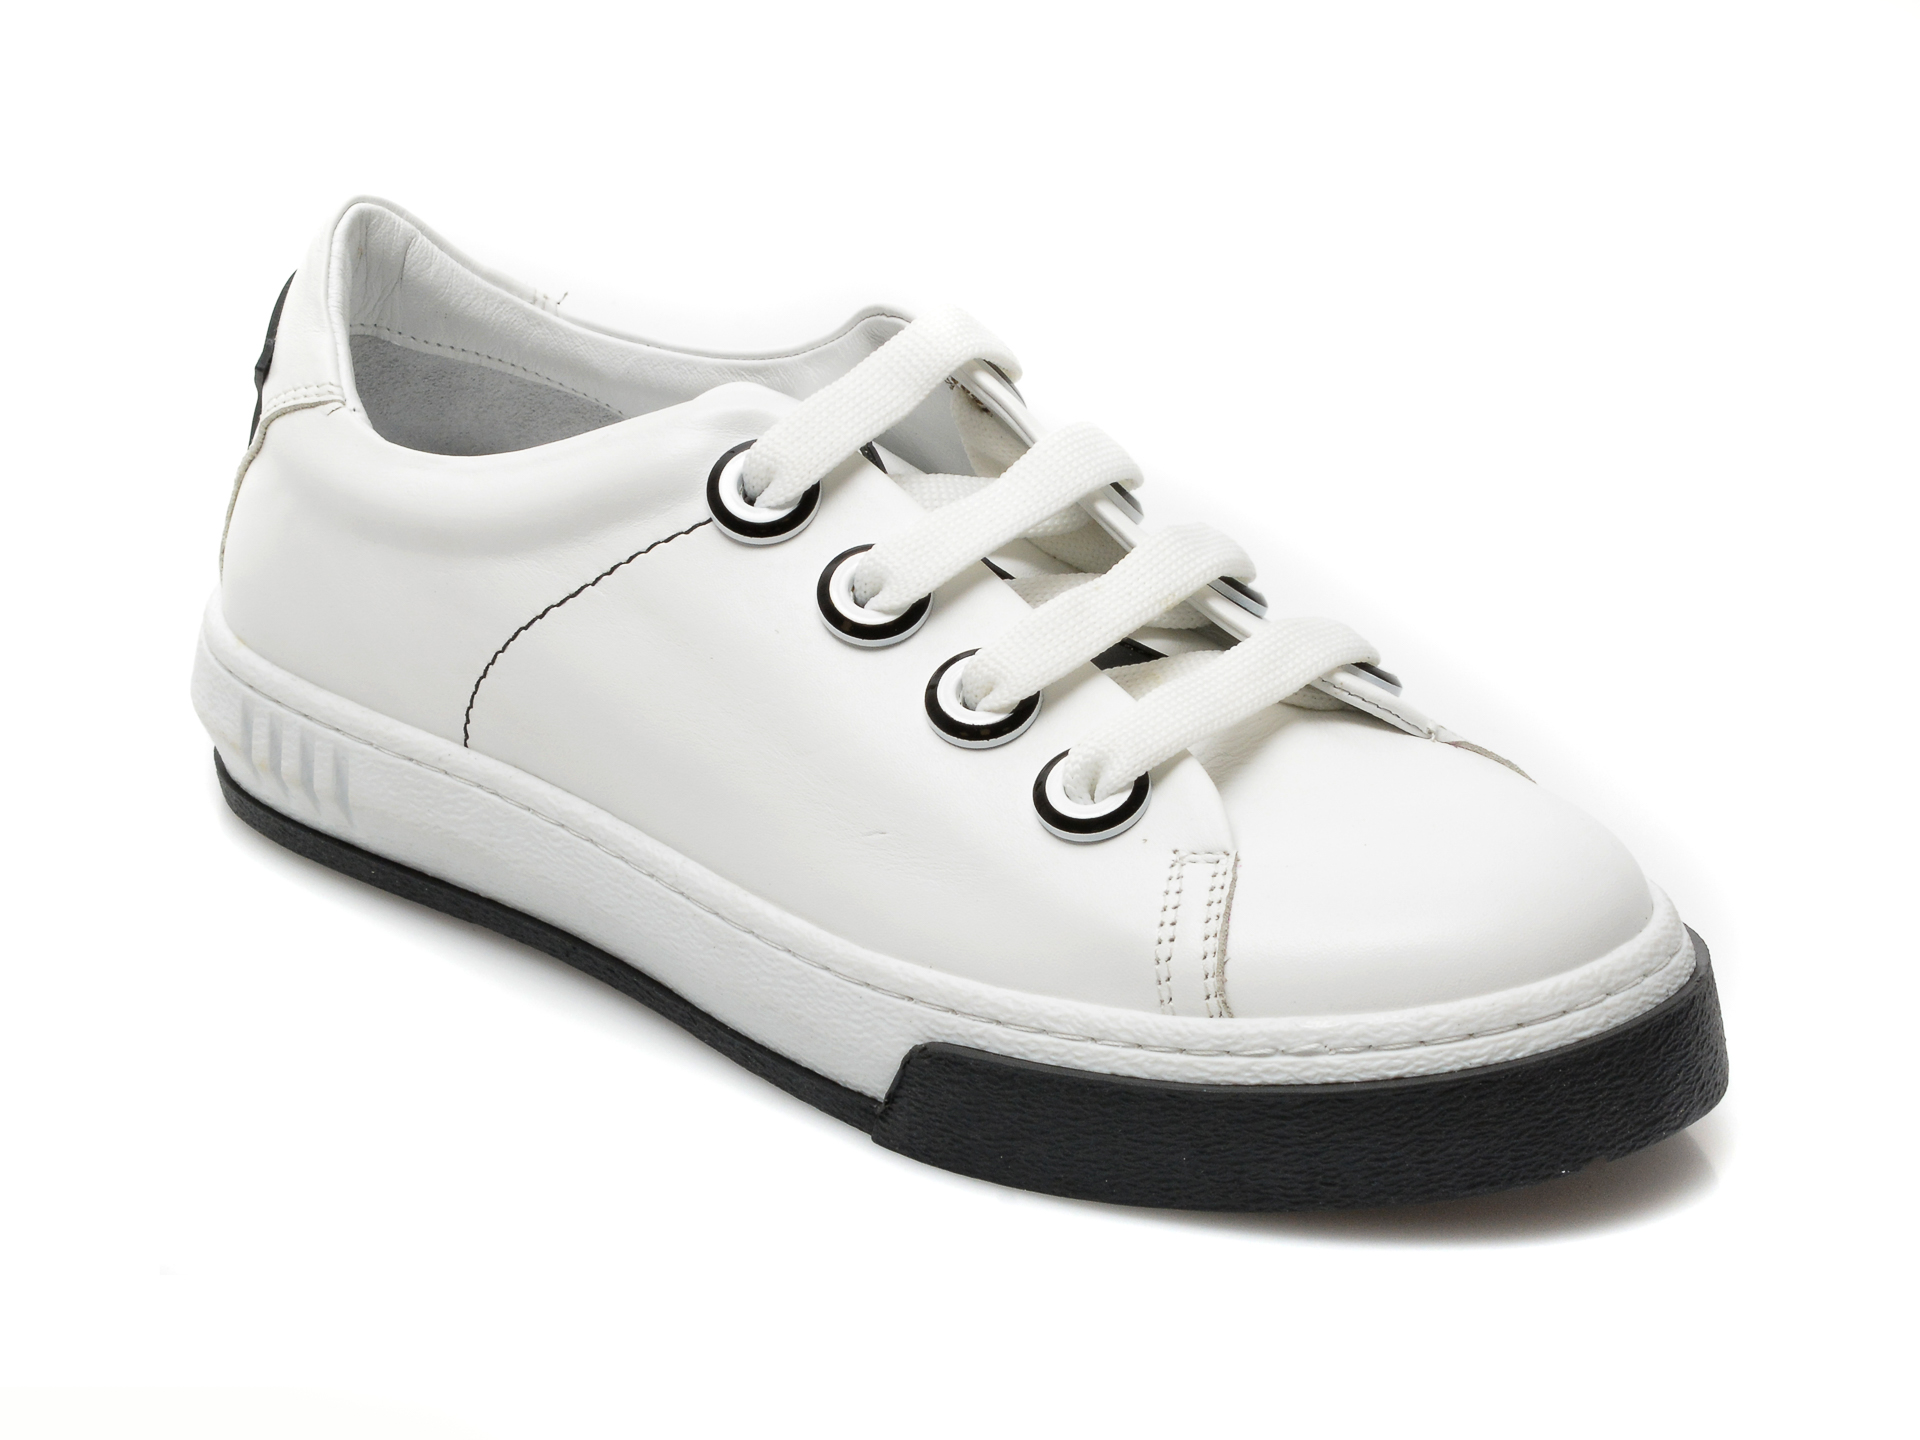 Pantofi sport BAVER albi, 167, din piele naturala BAVER BAVER